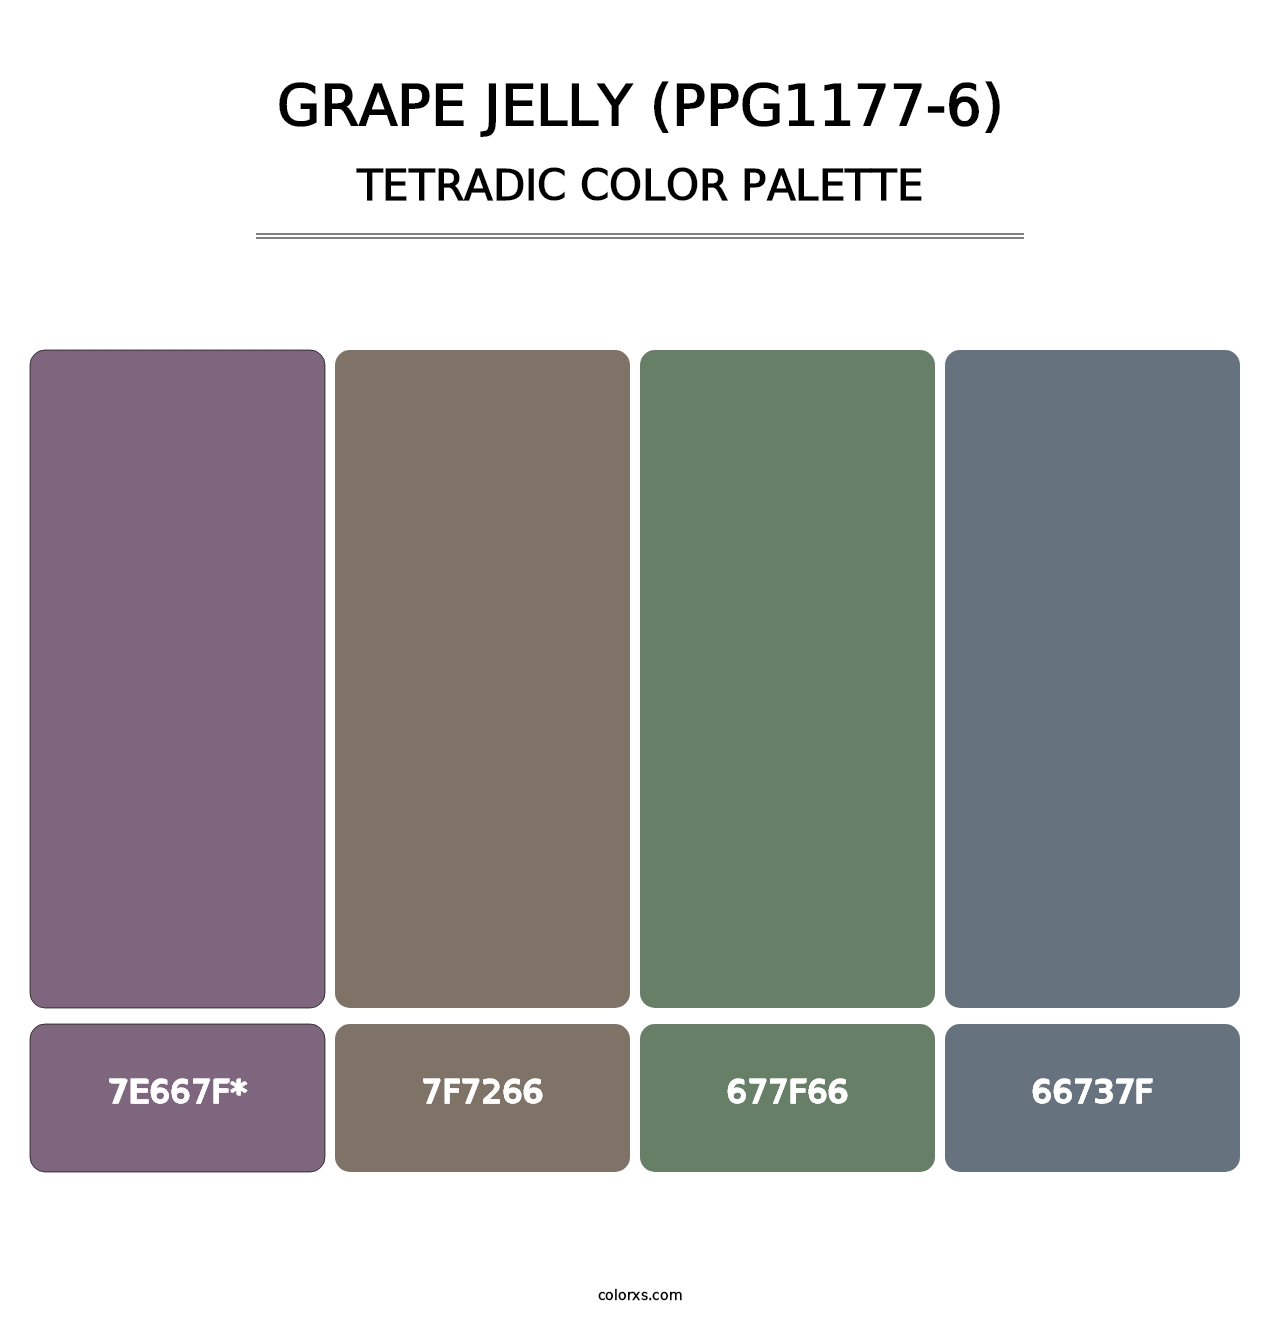 Grape Jelly (PPG1177-6) - Tetradic Color Palette